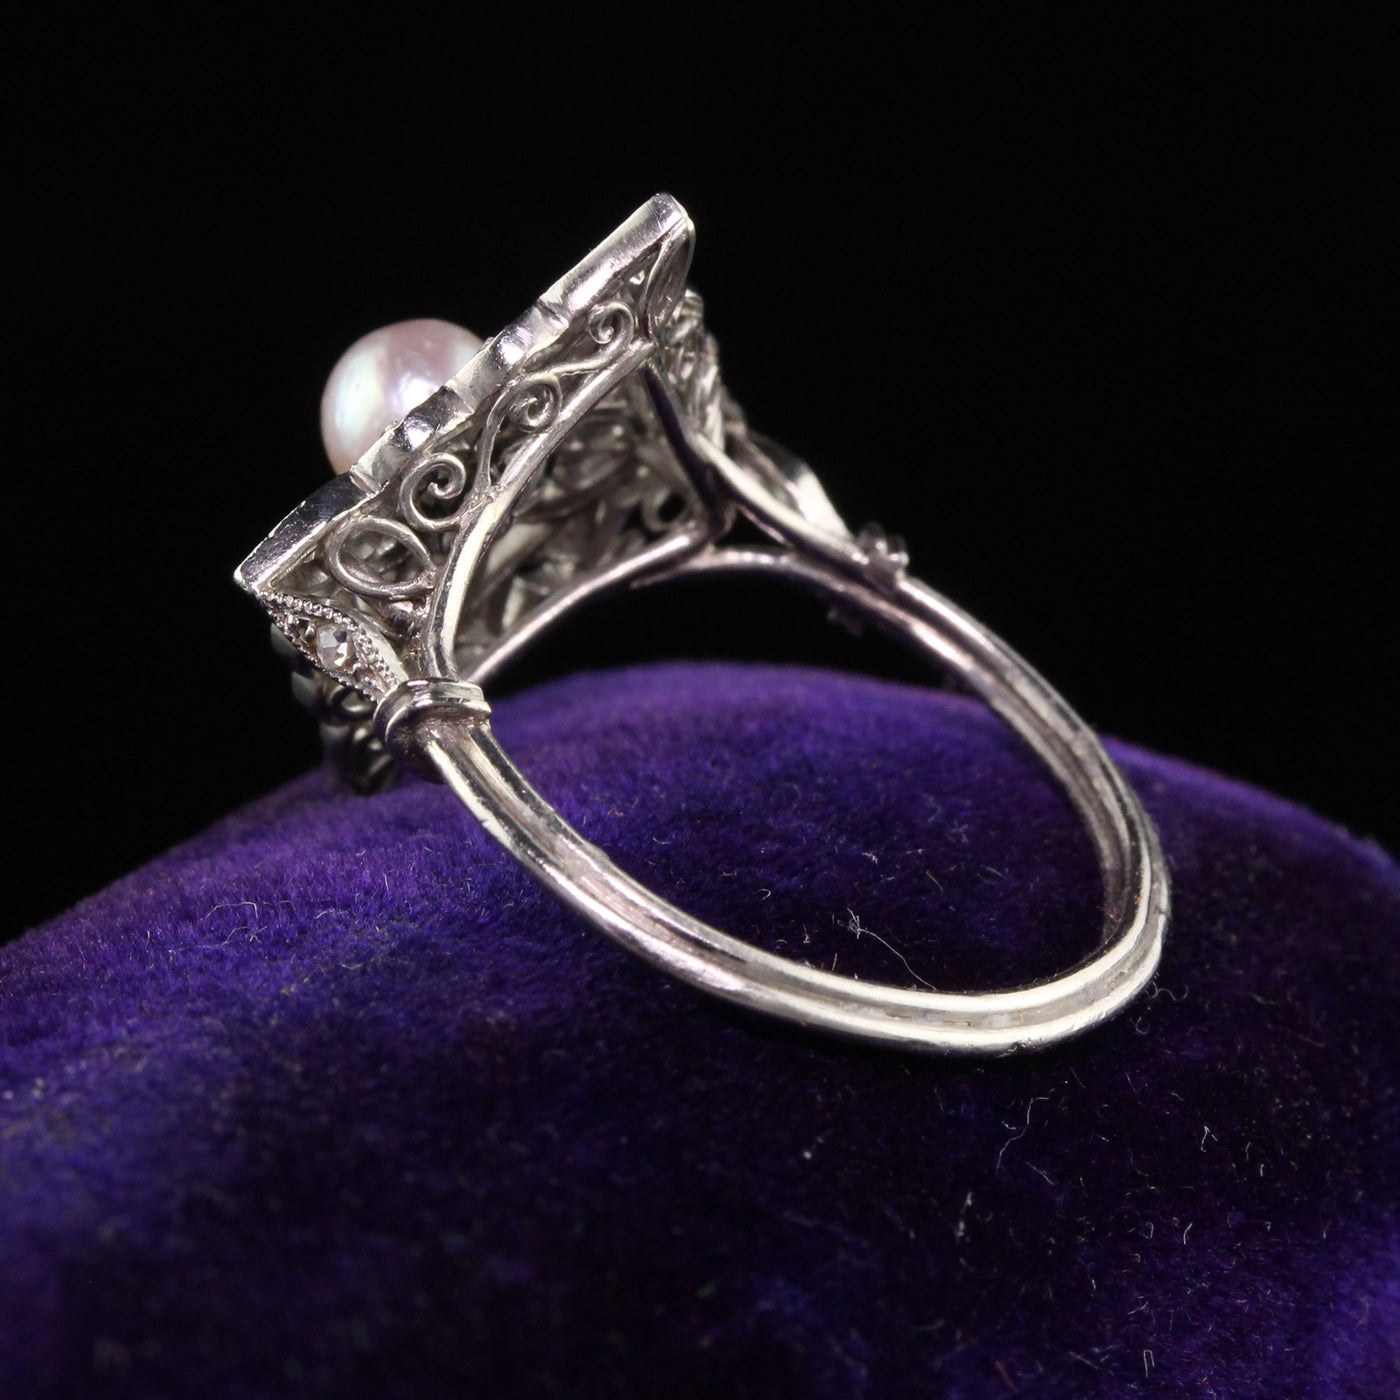 Antique Edwardian French Platinum Rose Cut Diamond Pearl Ring